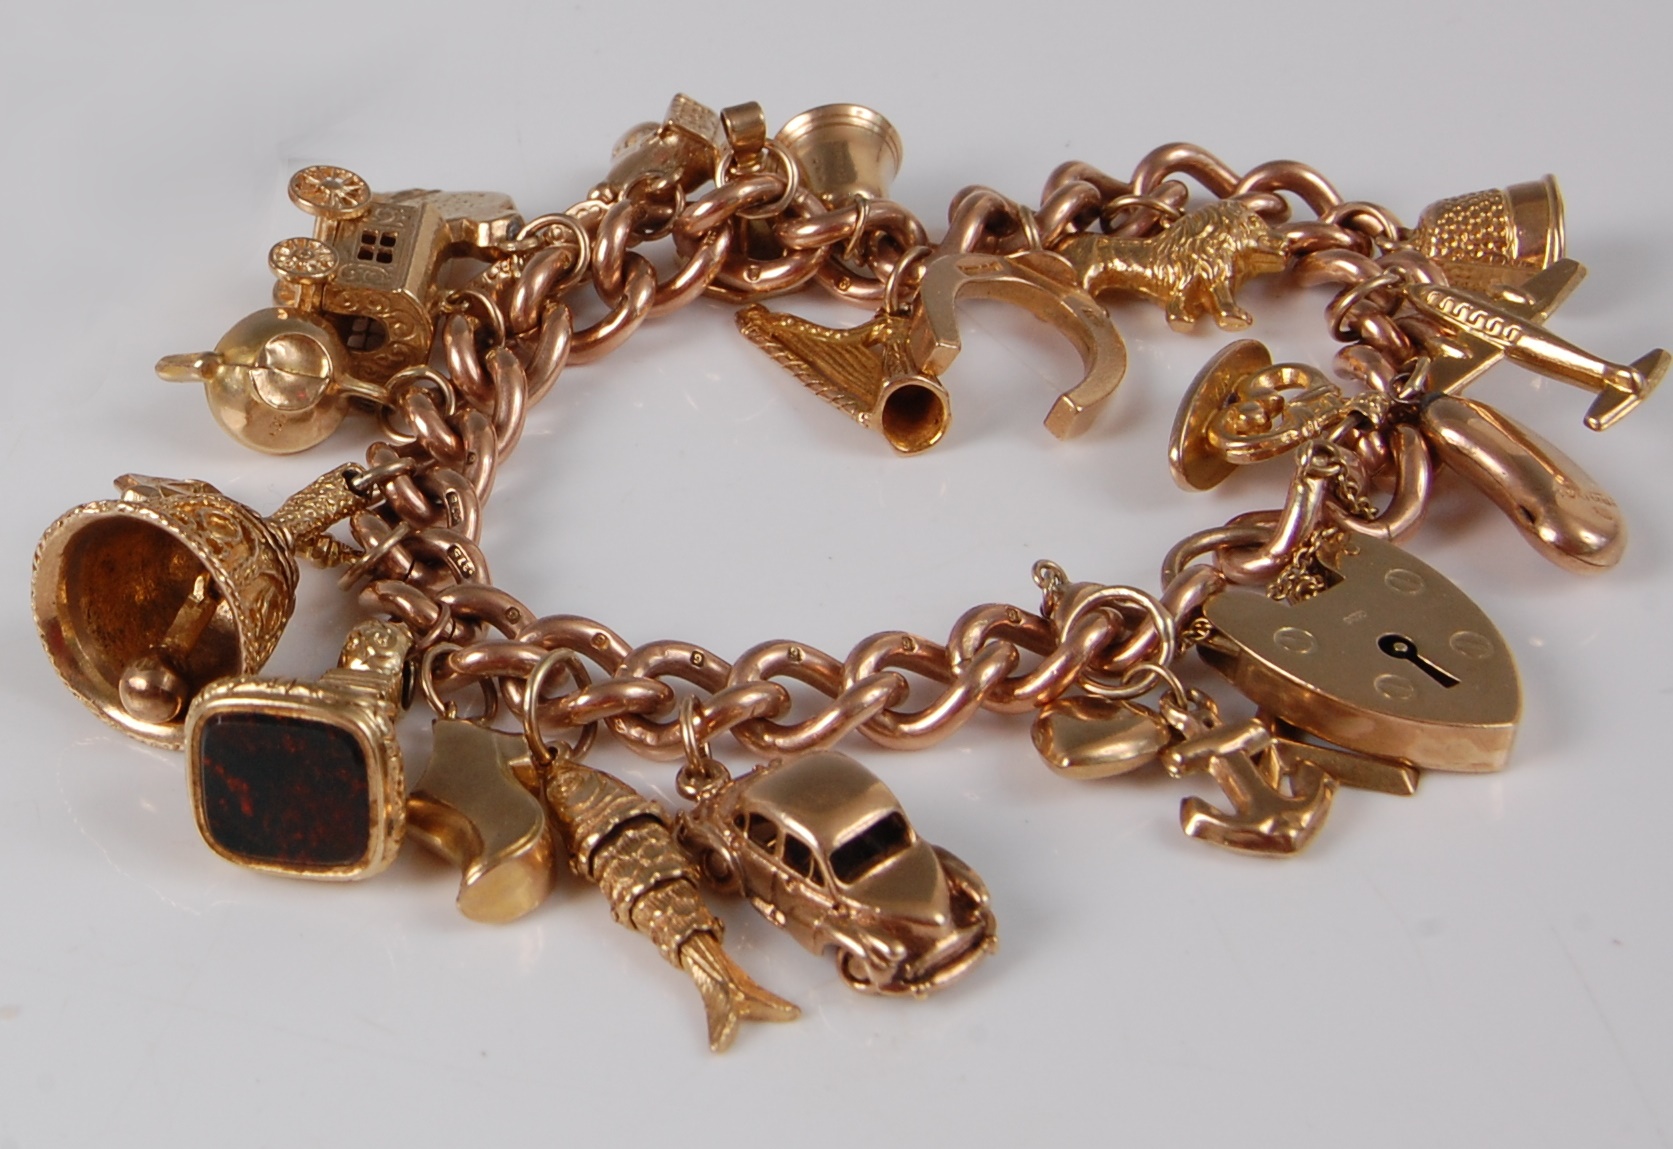 9ct Gold Charm Bracelet :: Cuttings